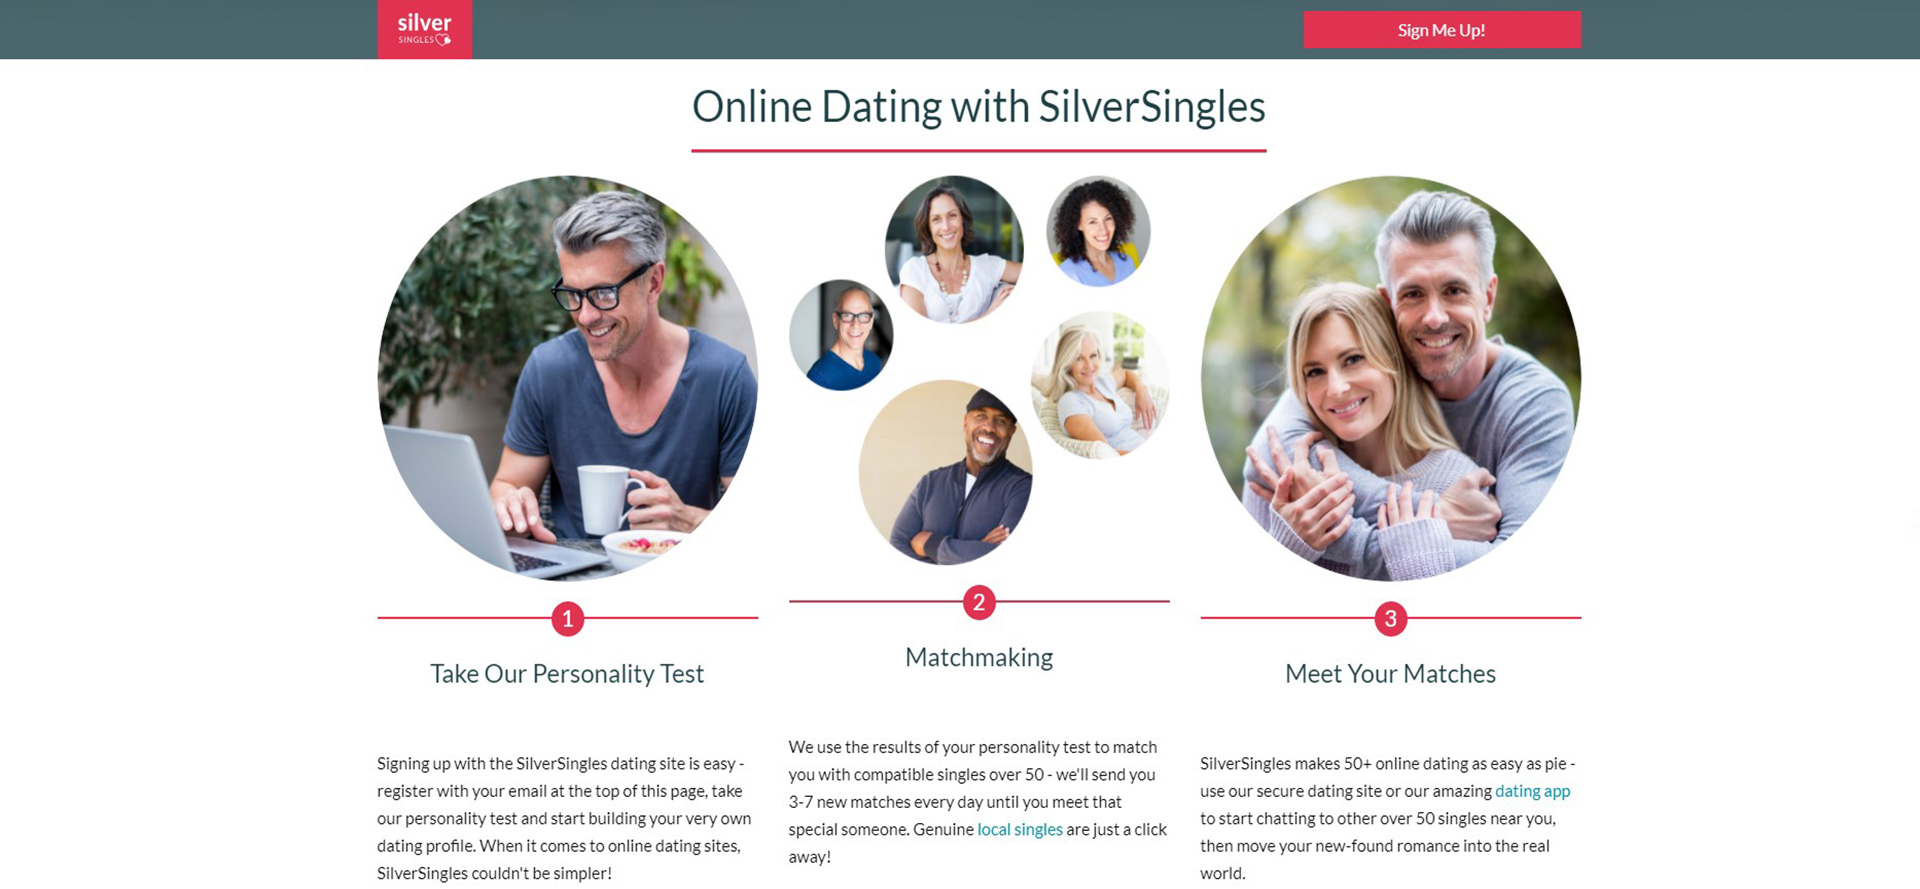 How do i use silver singles website?